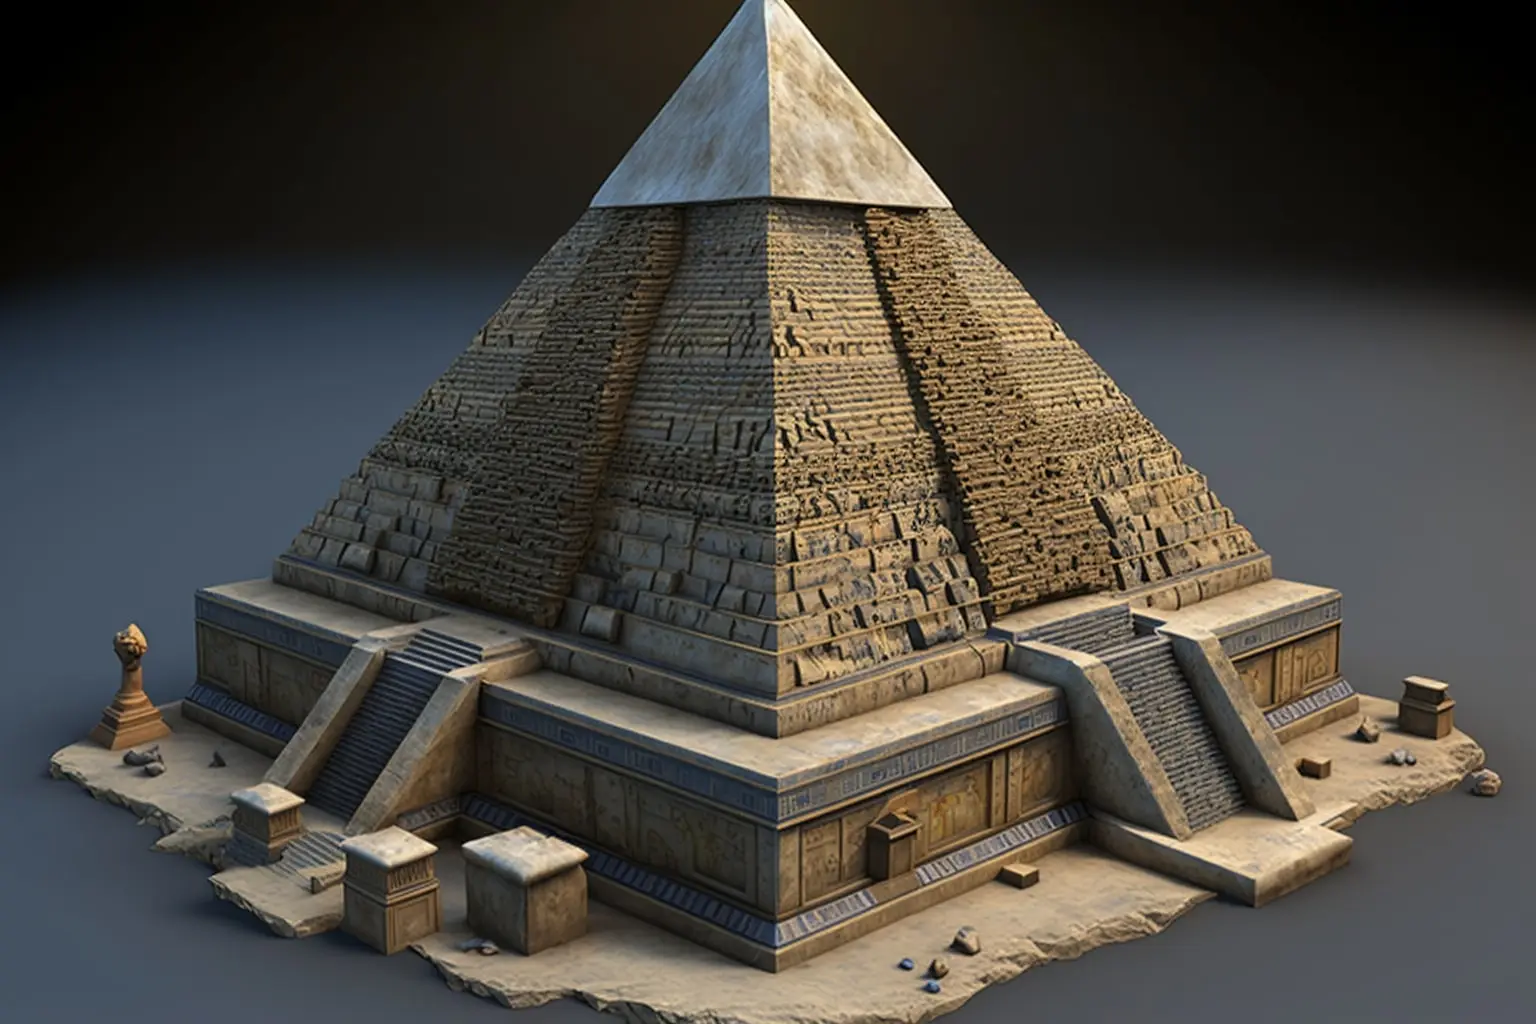 Egyptian Pyramid Geometry